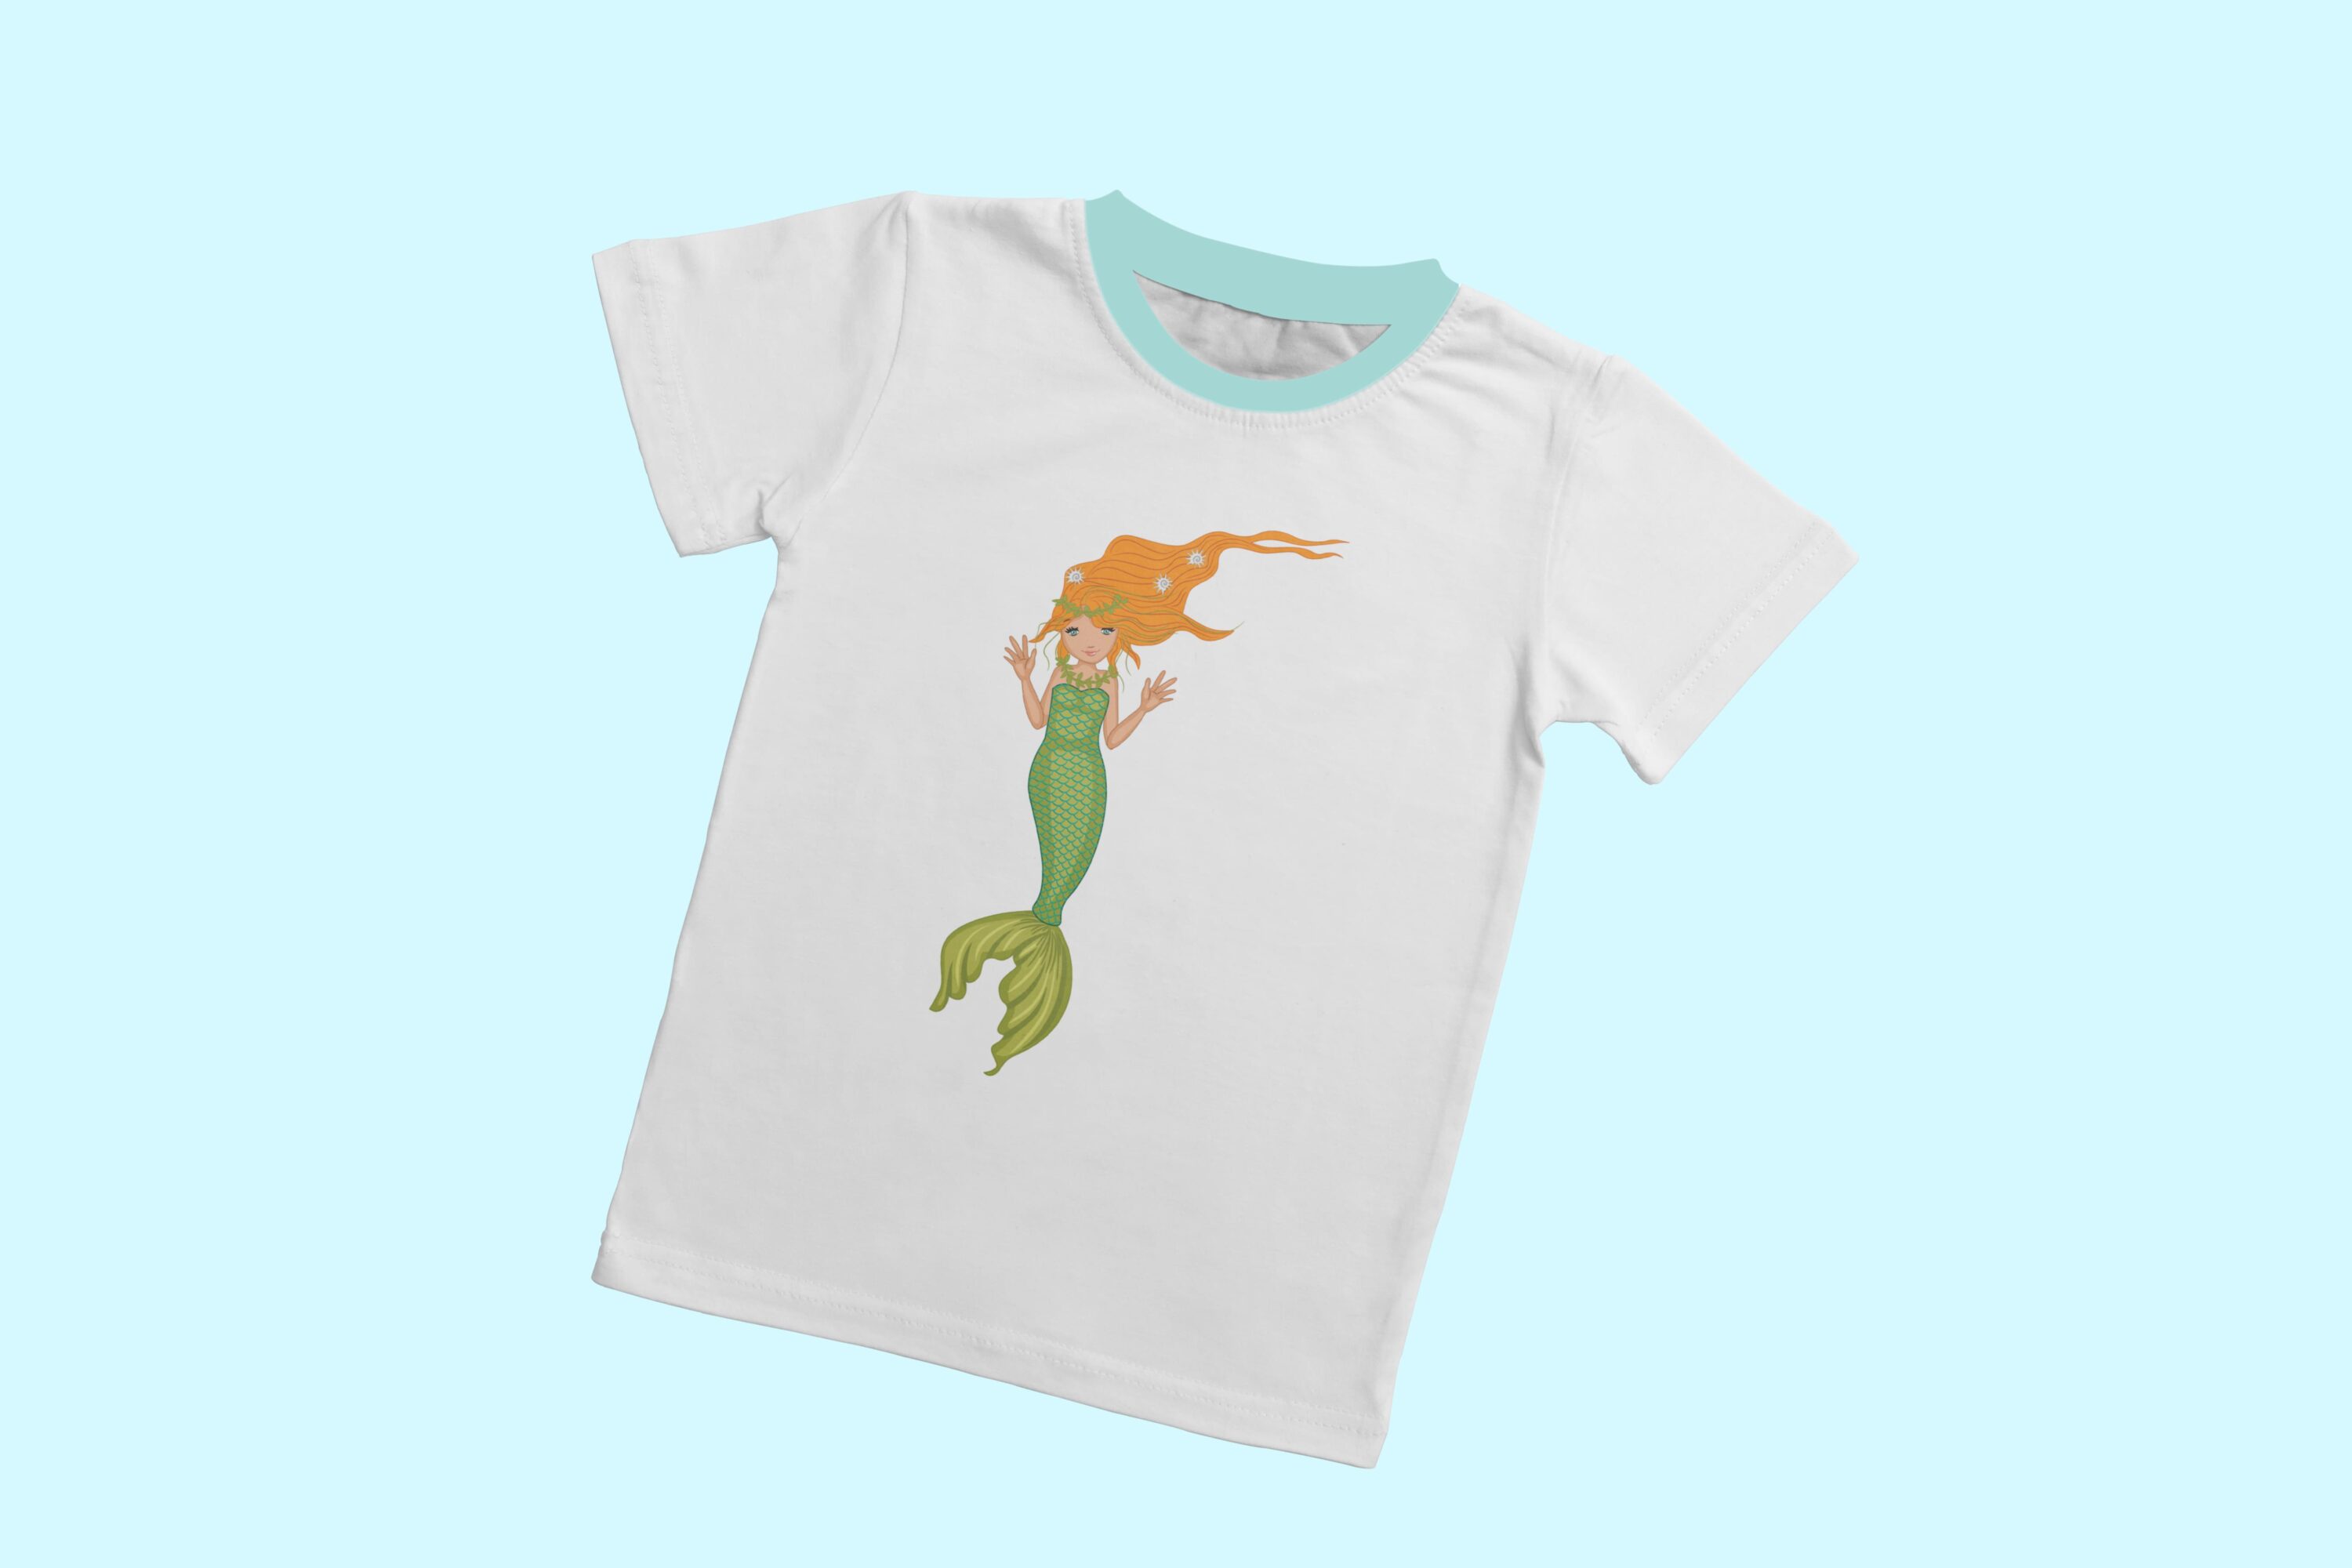 Classic white t-shirt with the swimming mermaid.